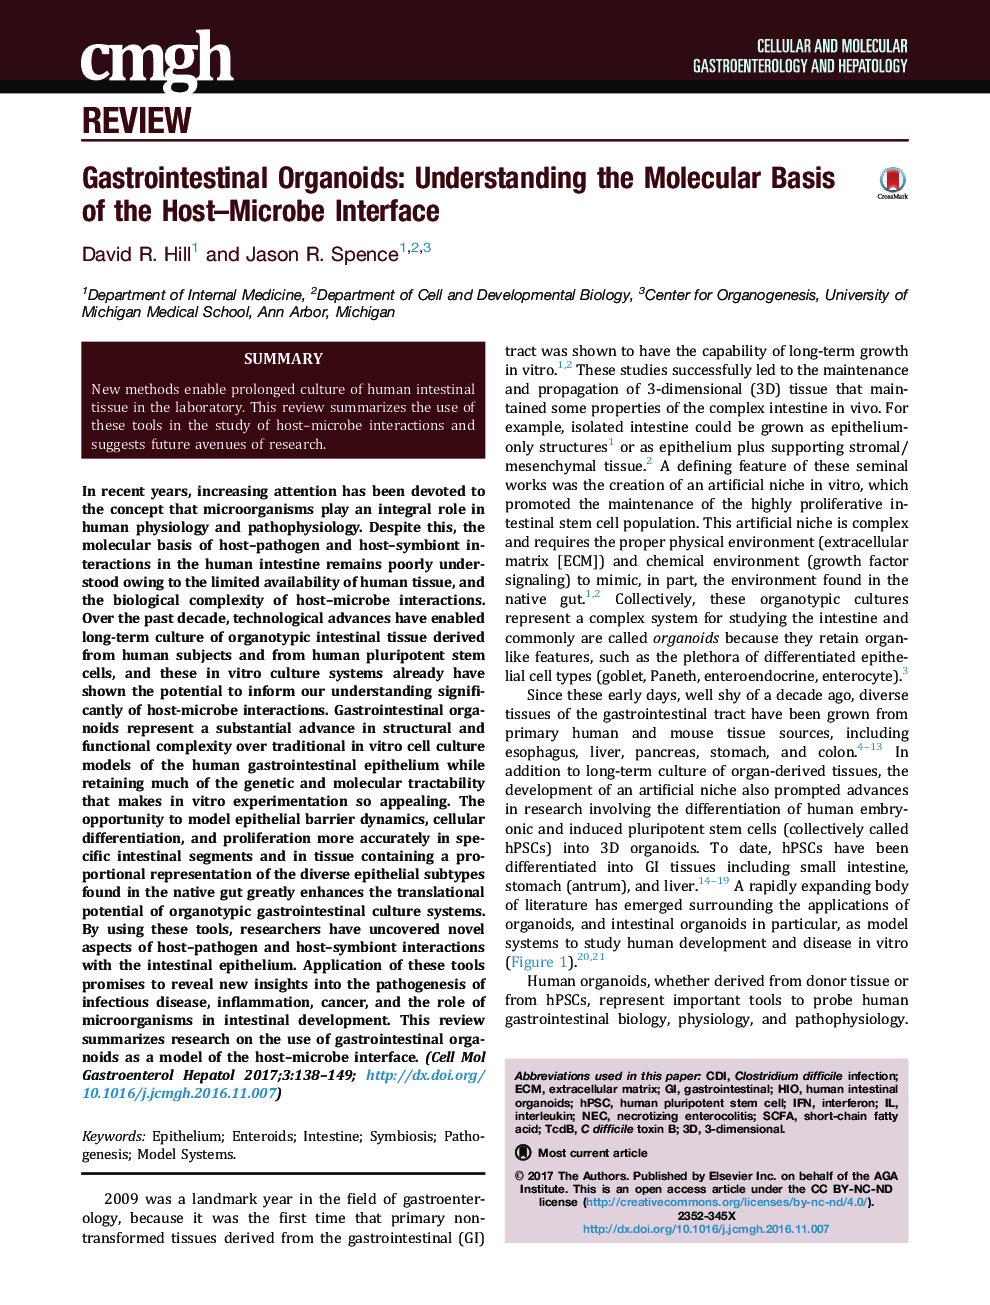 Gastrointestinal Organoids: Understanding the Molecular Basis of the Host-Microbe Interface